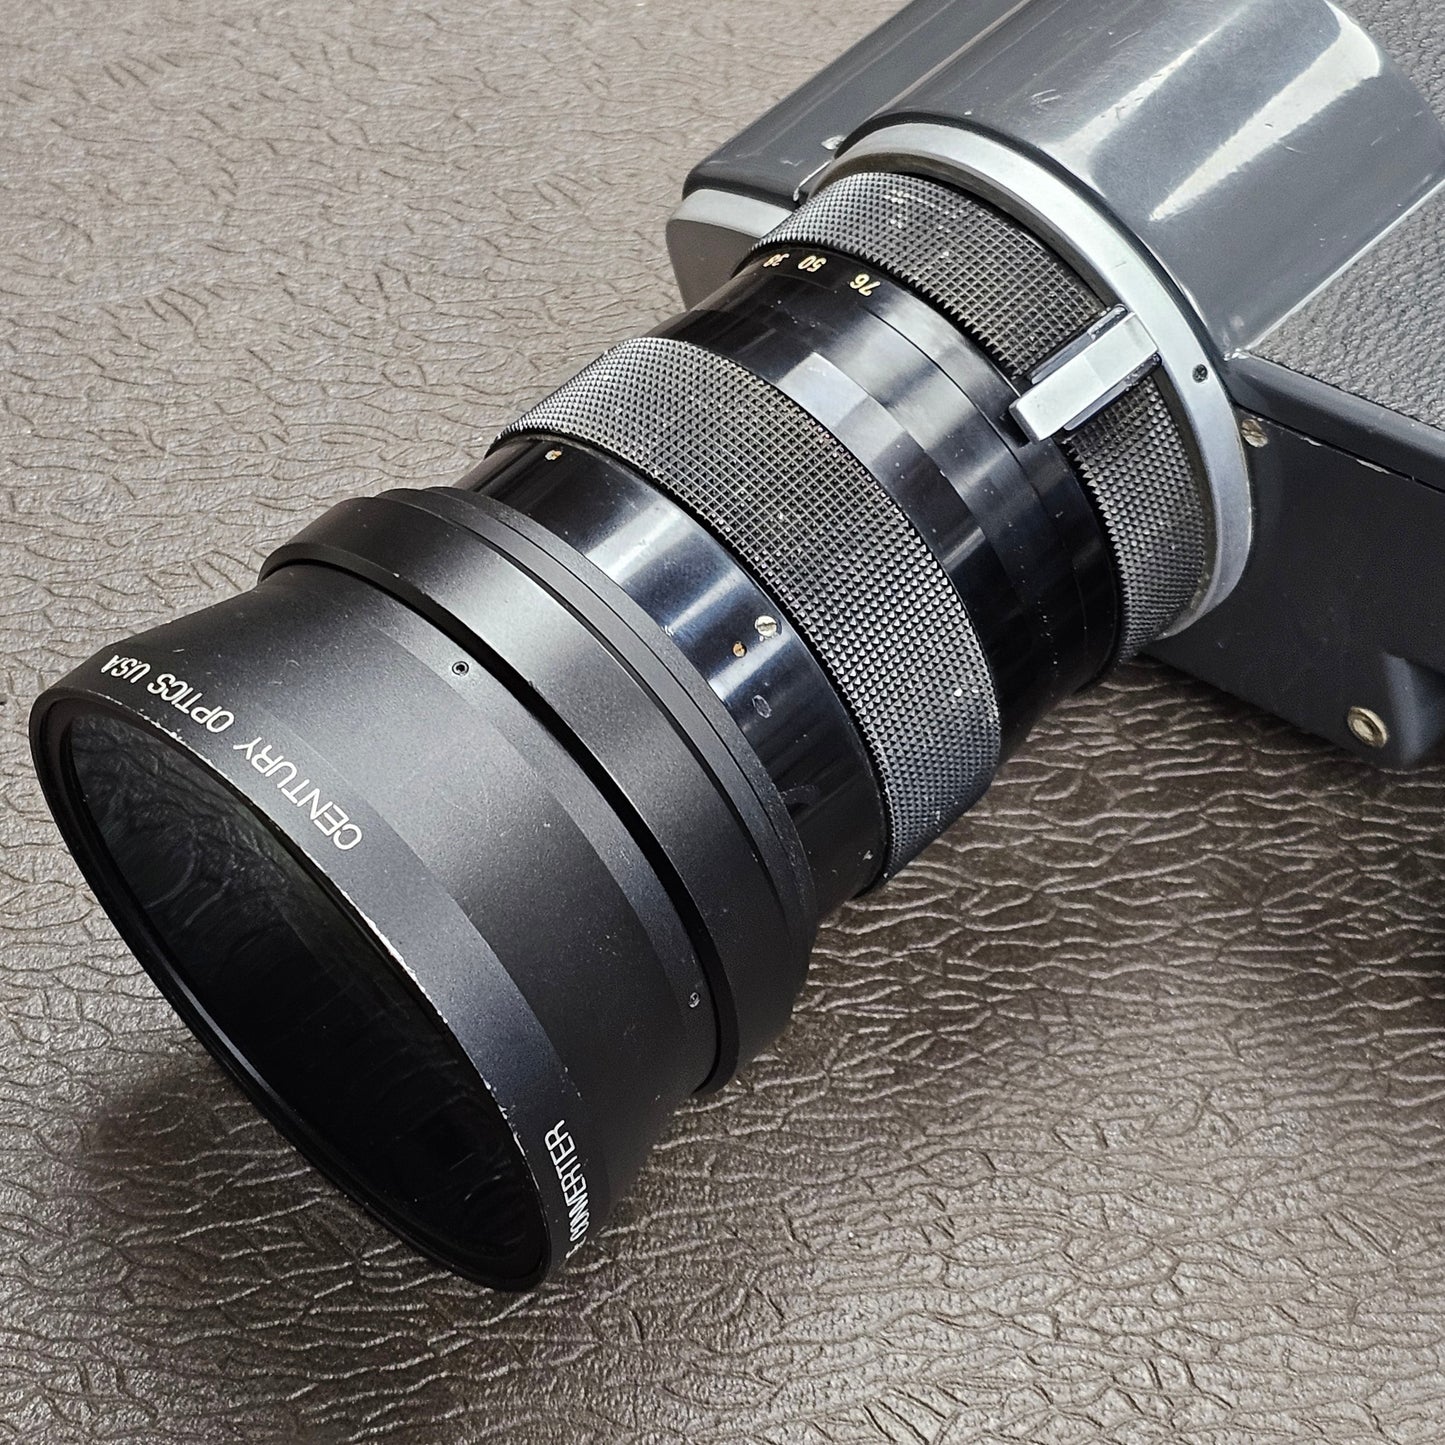 Century Optics Pro Series HD 0.7X  Wide Angle Attachment for Canon Scoopic Cameras S# C103257